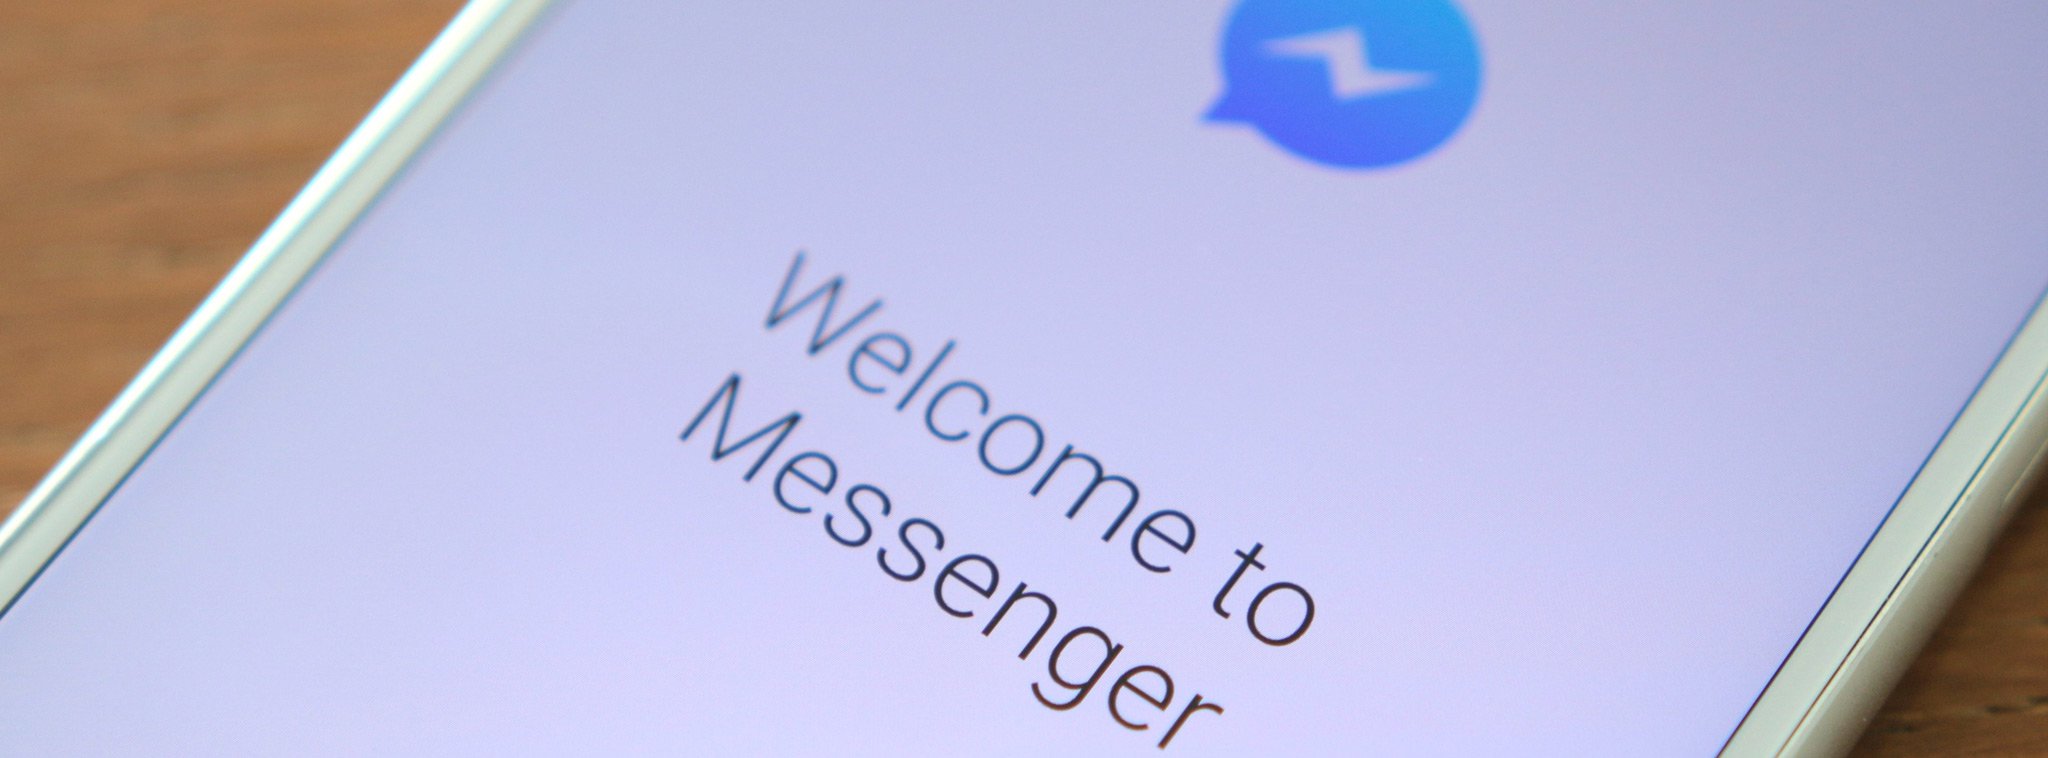 Phó chủ tịch Facebook muốn Facebook Messengers thay thế hoàn toàn iMessage và Android Message